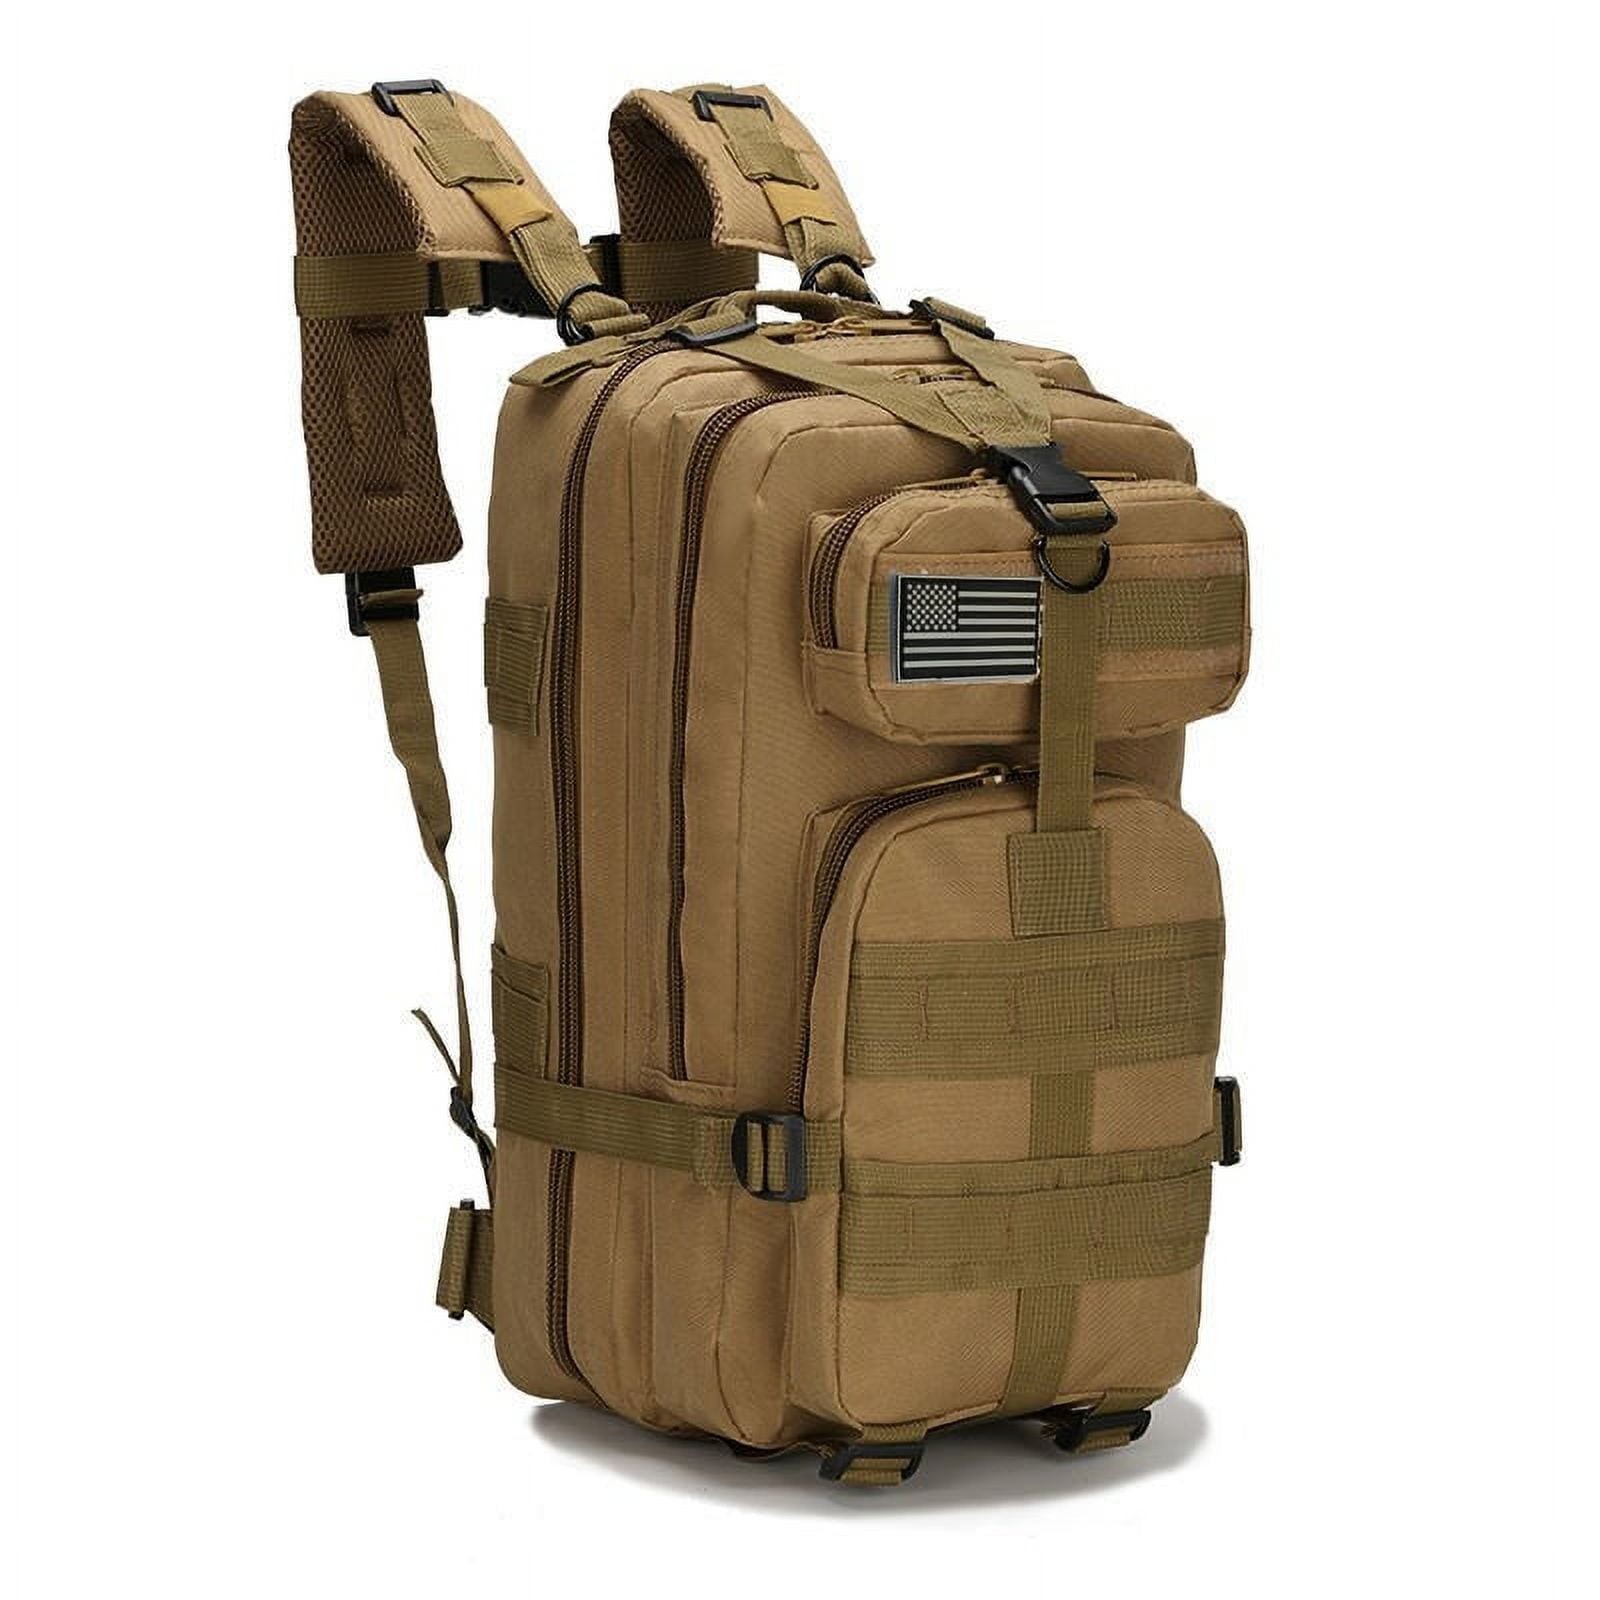 30L/50L Military Tactical Backpacks Men Sports Hiking Camping